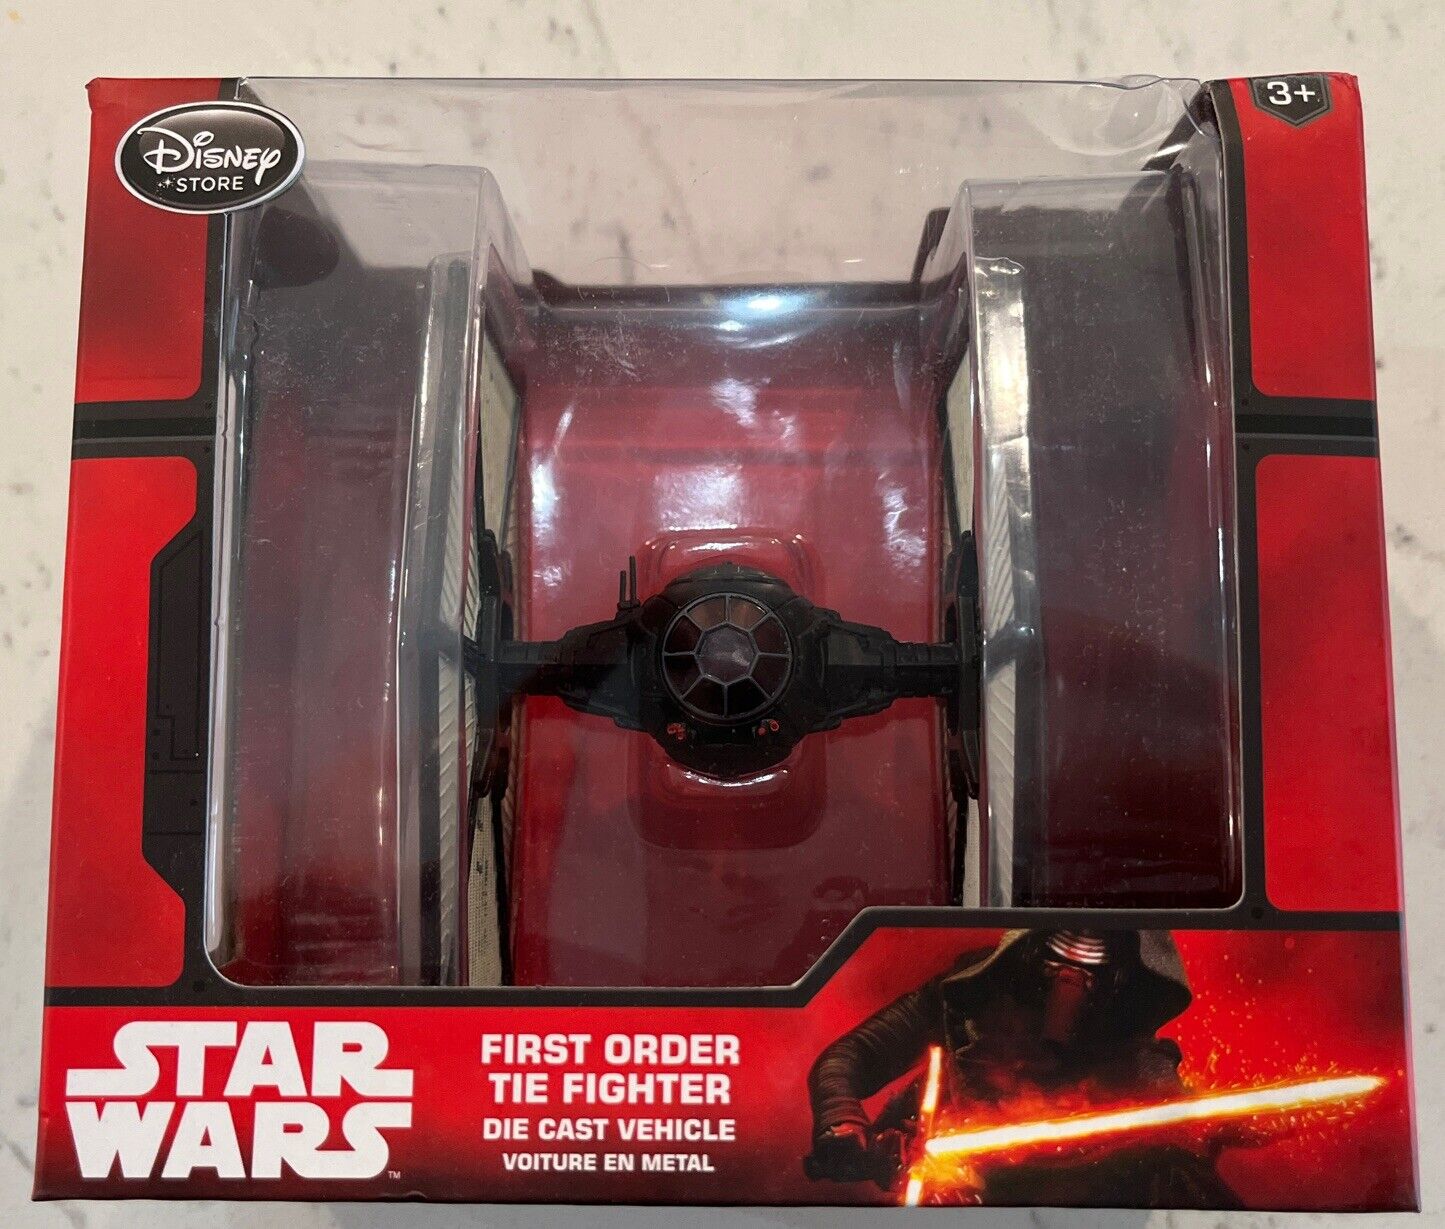 Disney Star Wars The Force Awakens First Order Tie Fighter Diecast Vehicle